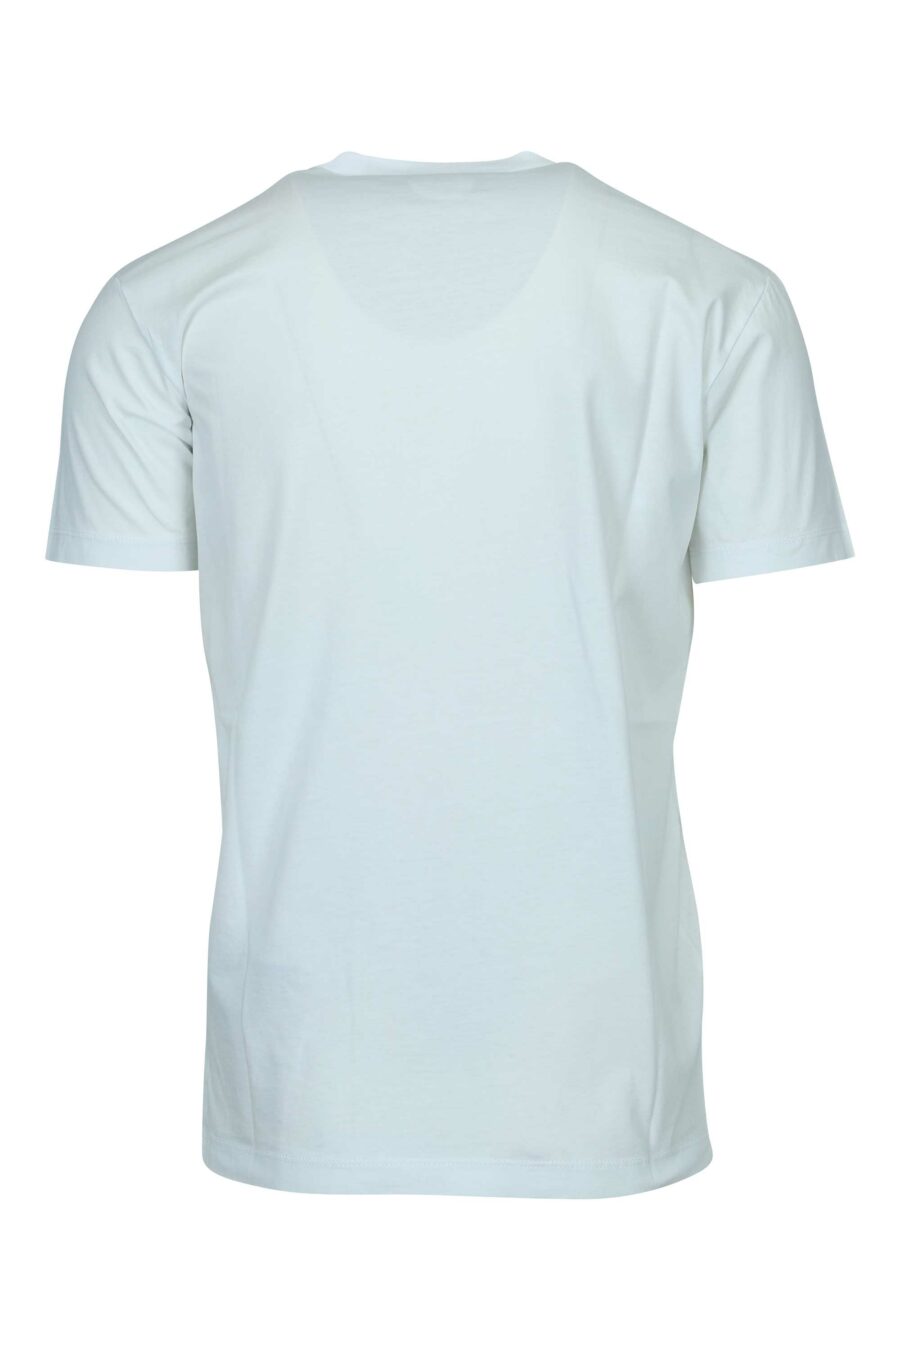 Weißes T-Shirt mit mehrfarbigem Retro-Maxilogo - 8054148447434 1 2